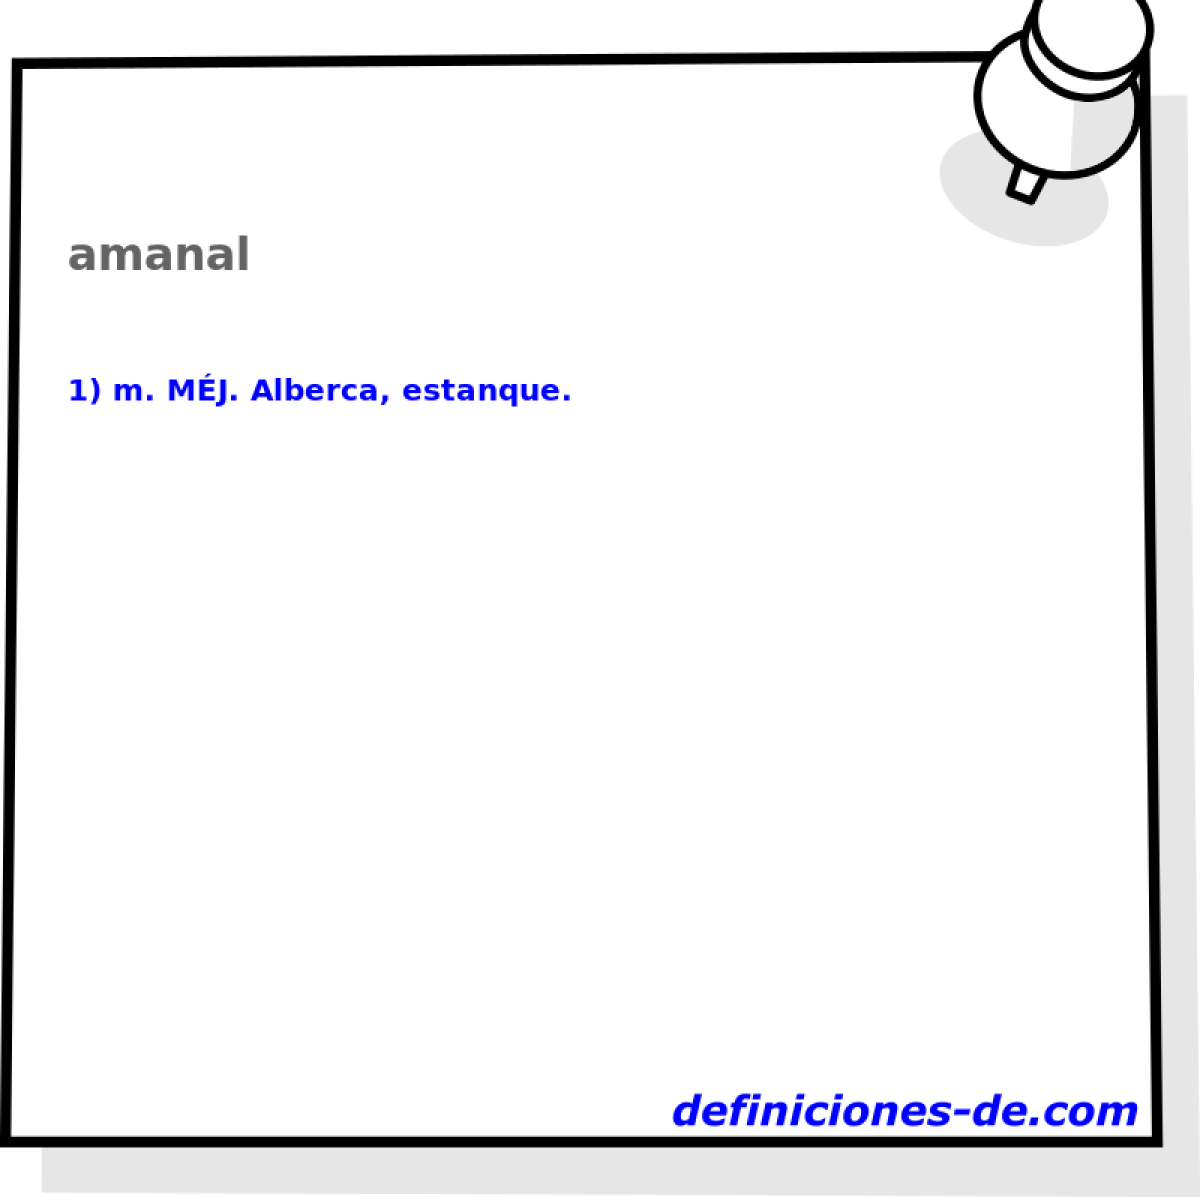 amanal 